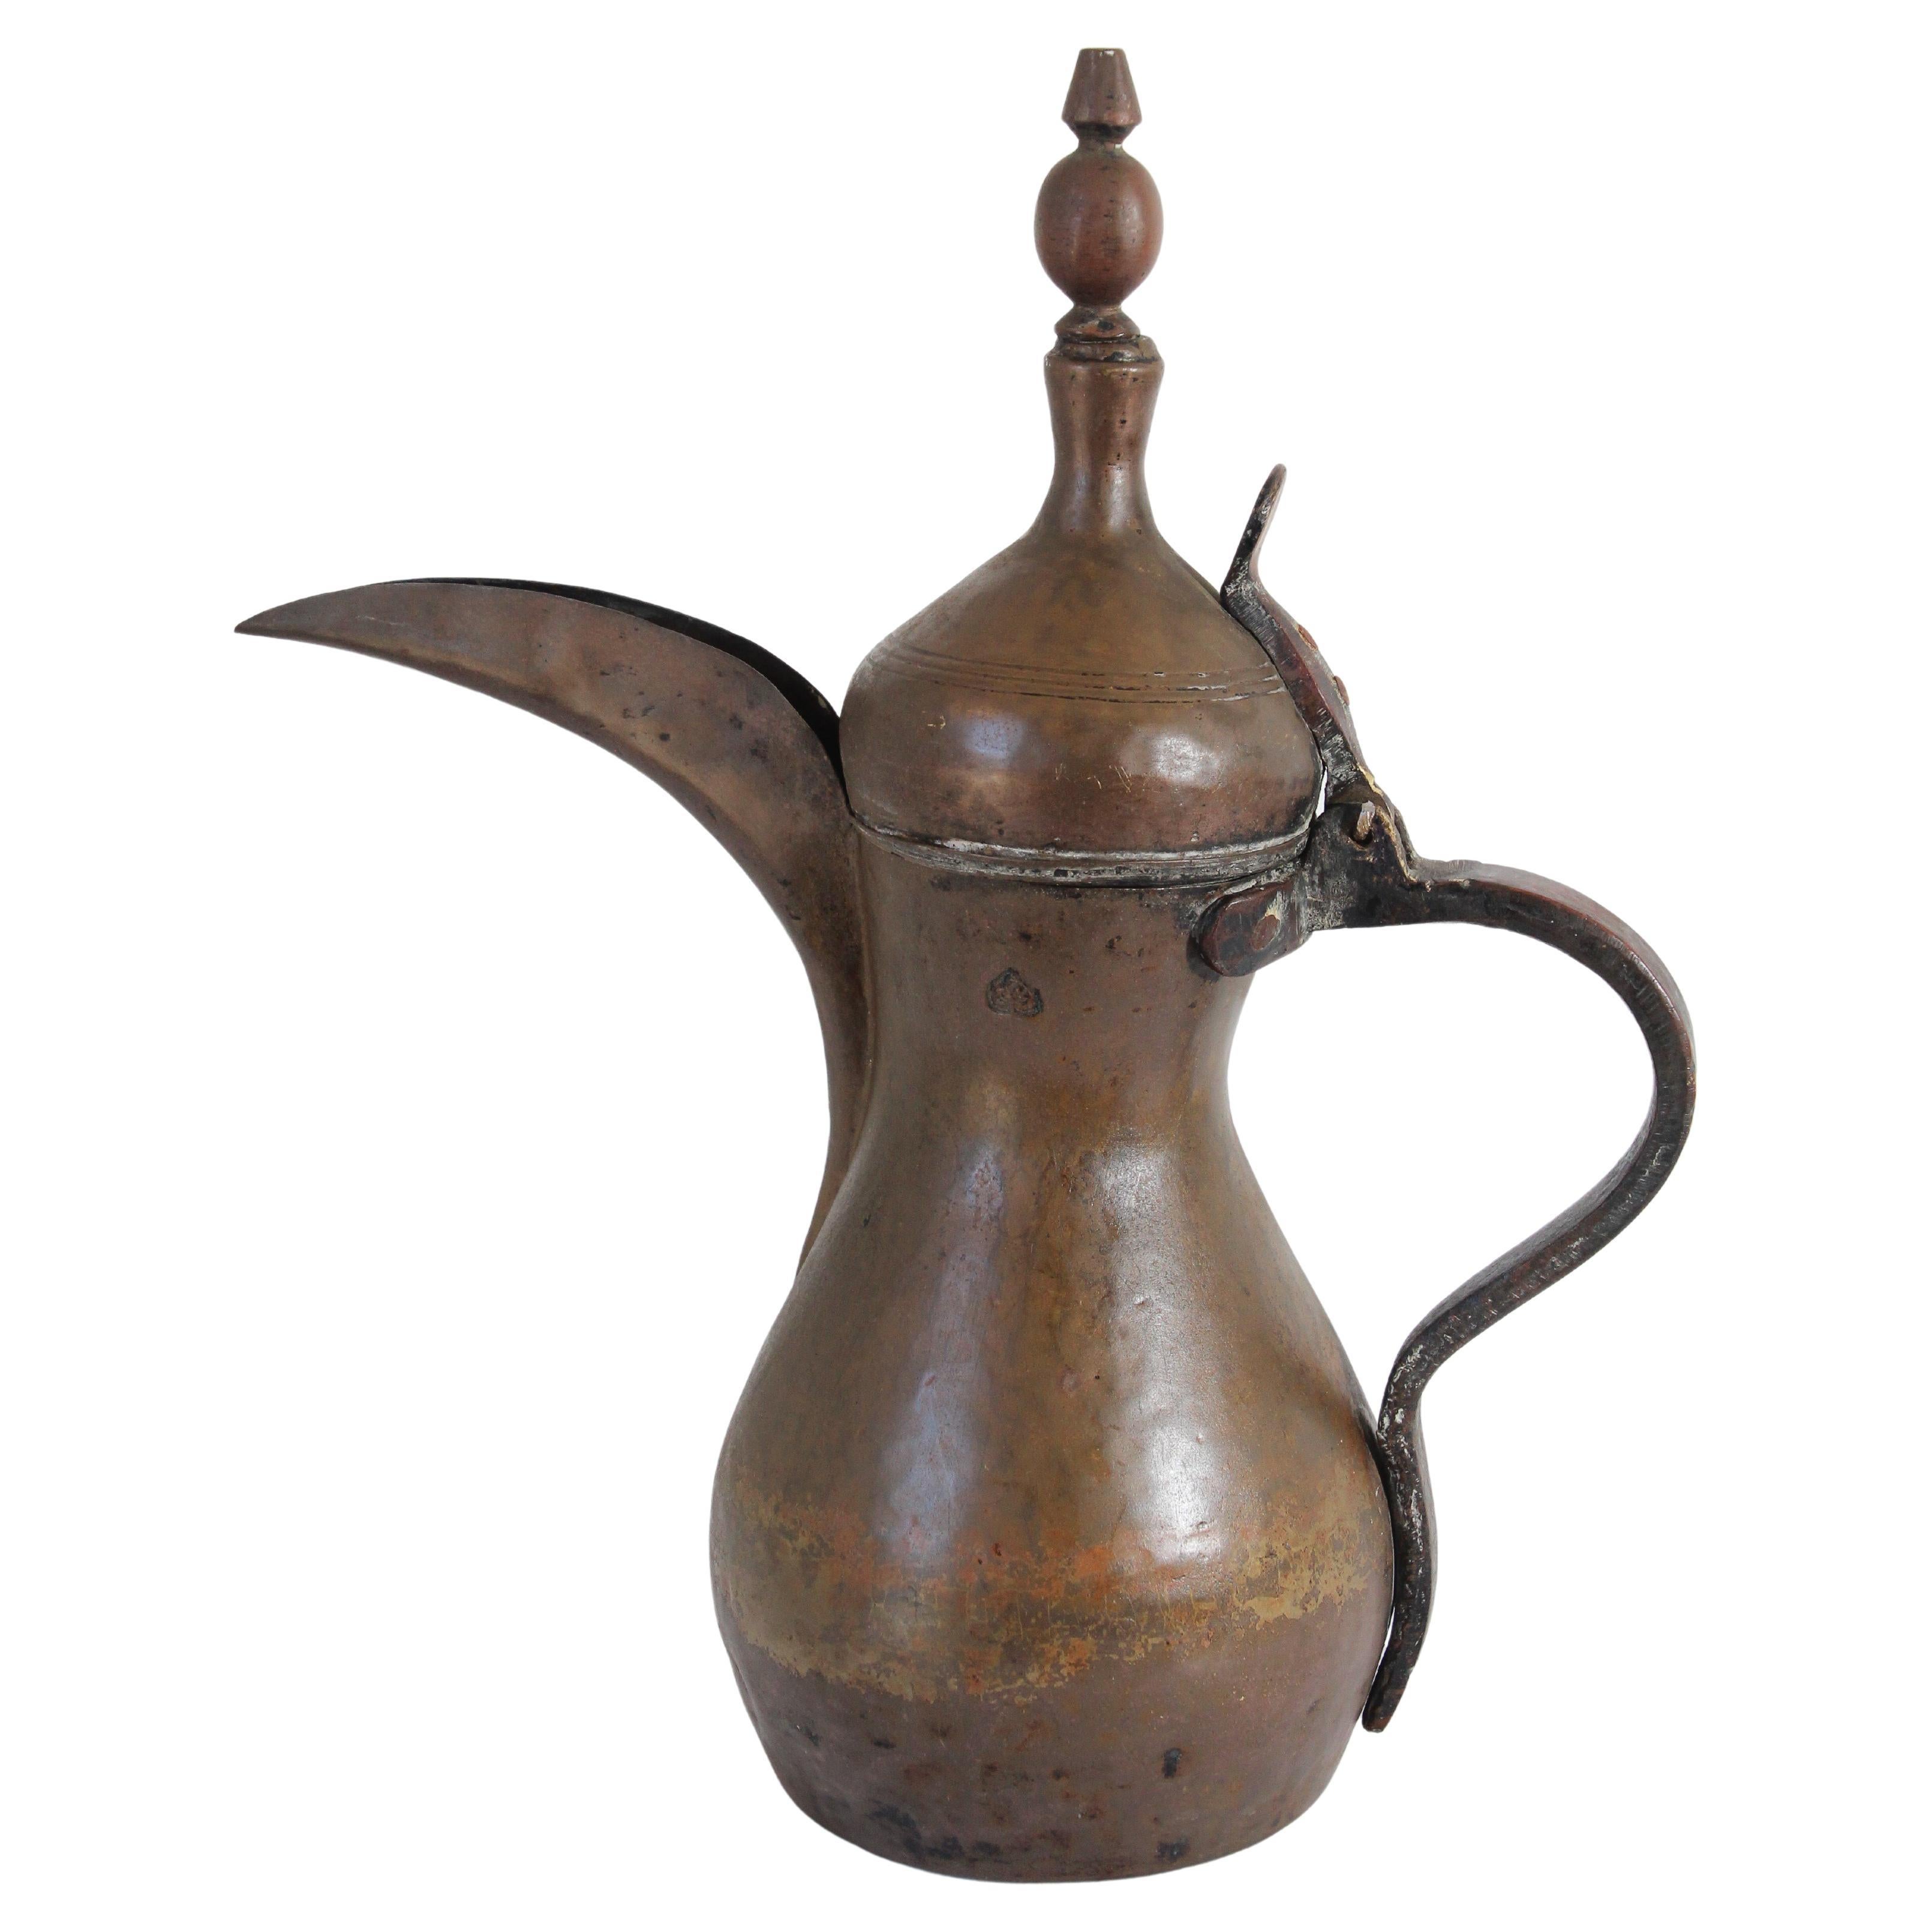 https://a.1stdibscdn.com/middle-eastern-antique-dallah-arabic-coffee-pot-for-sale/f_9068/f_254459521632490717012/f_25445952_1632490718810_bg_processed.jpg